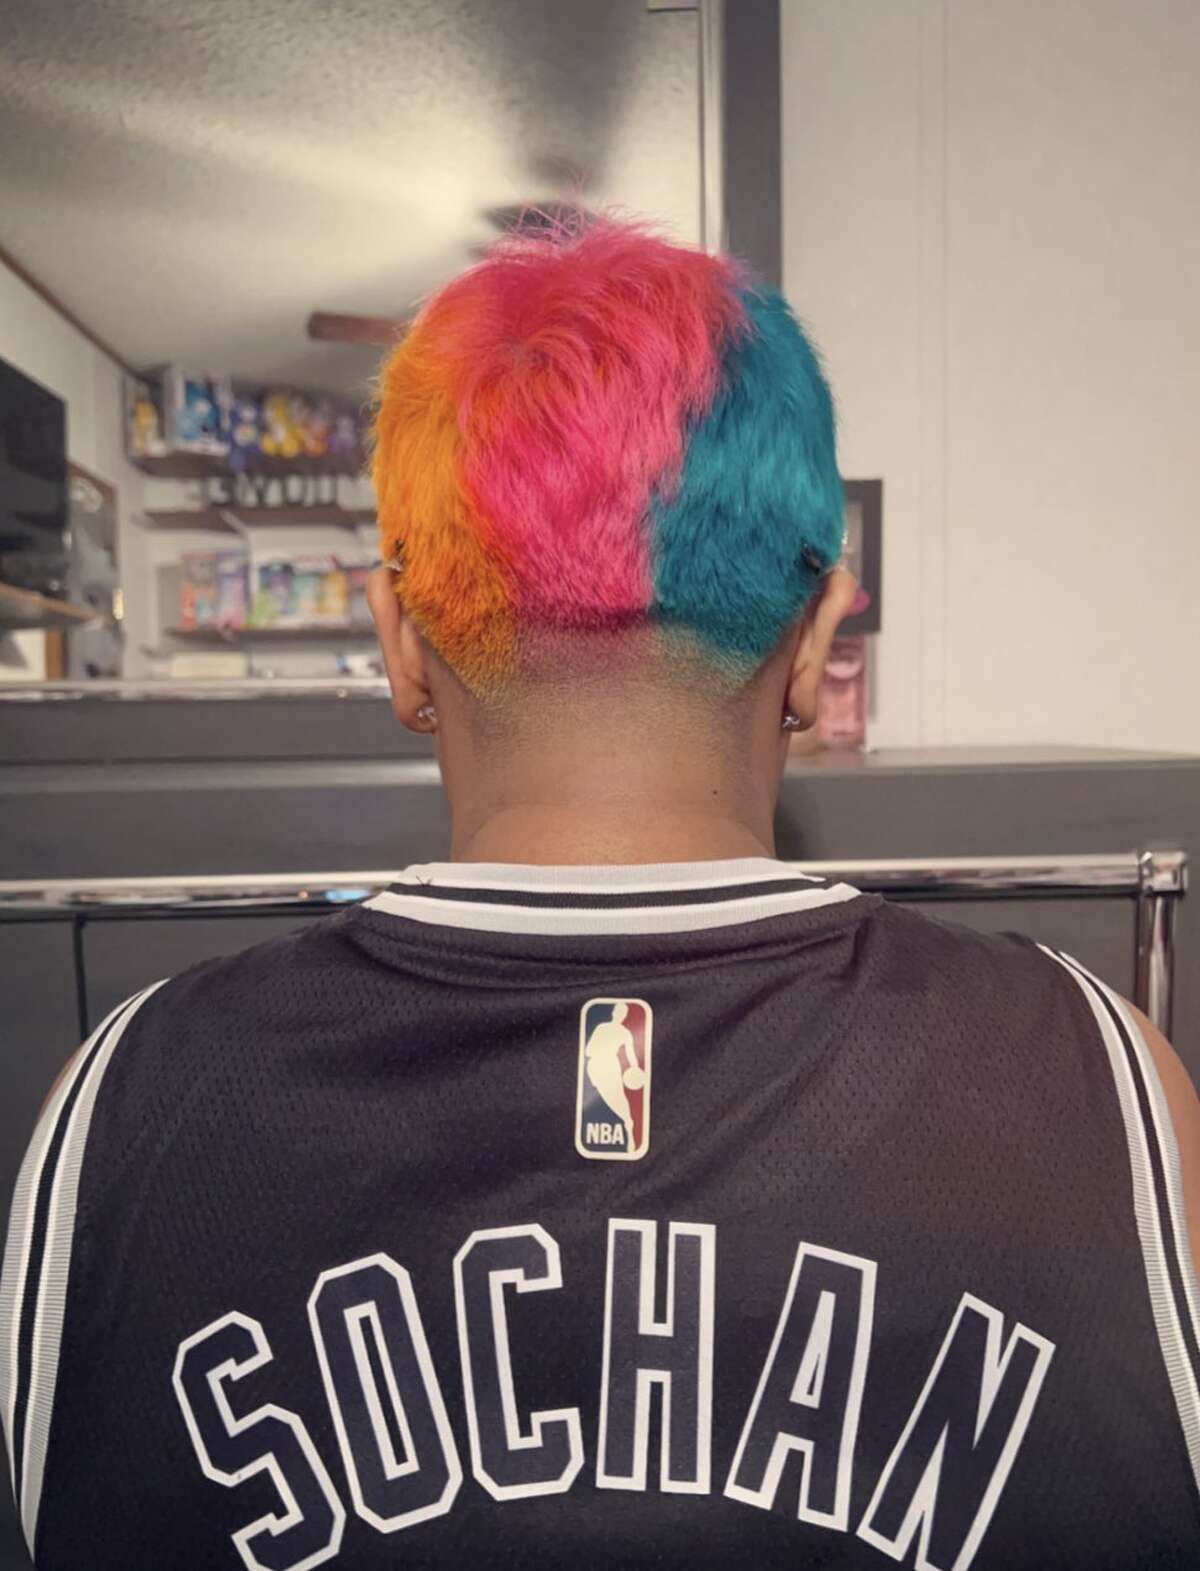 One dedicated fan channeled Jeremy Sochan's style with Fiesta Spurs-colored hair.